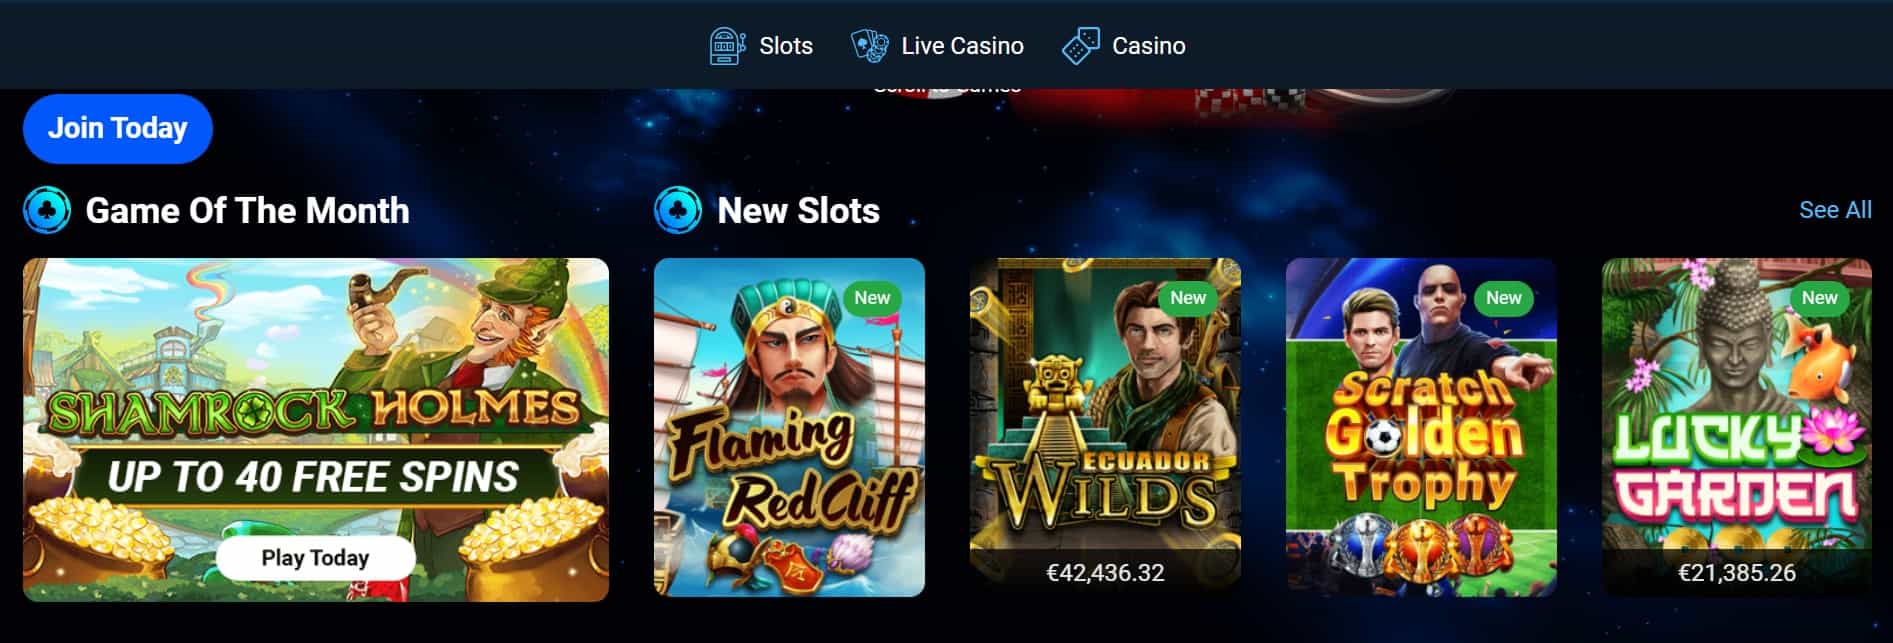 Spin247 Casino pelivalikoima